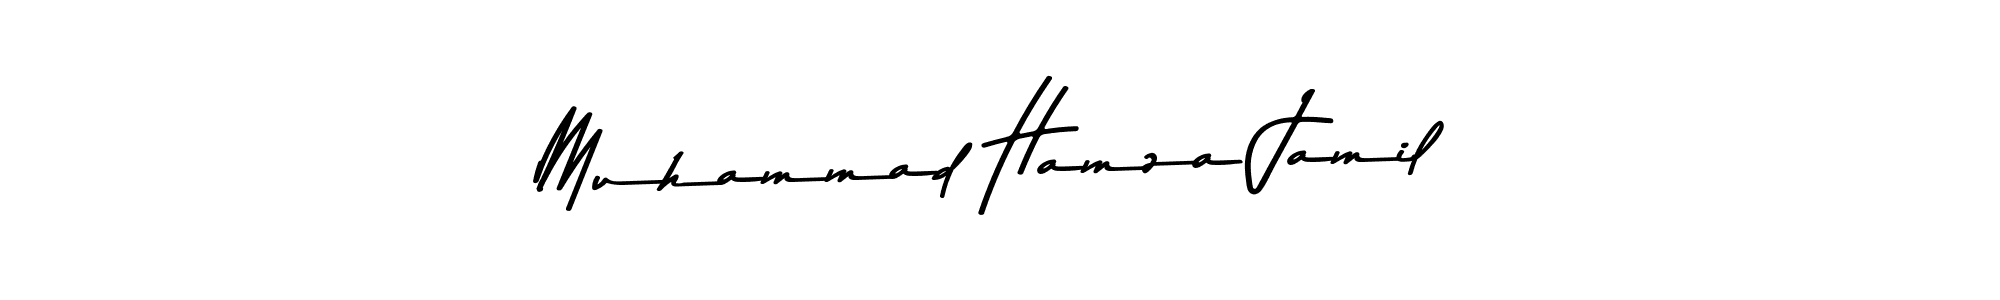 Muhammad Hamza Jamil stylish signature style. Best Handwritten Sign (Asem Kandis PERSONAL USE) for my name. Handwritten Signature Collection Ideas for my name Muhammad Hamza Jamil. Muhammad Hamza Jamil signature style 9 images and pictures png